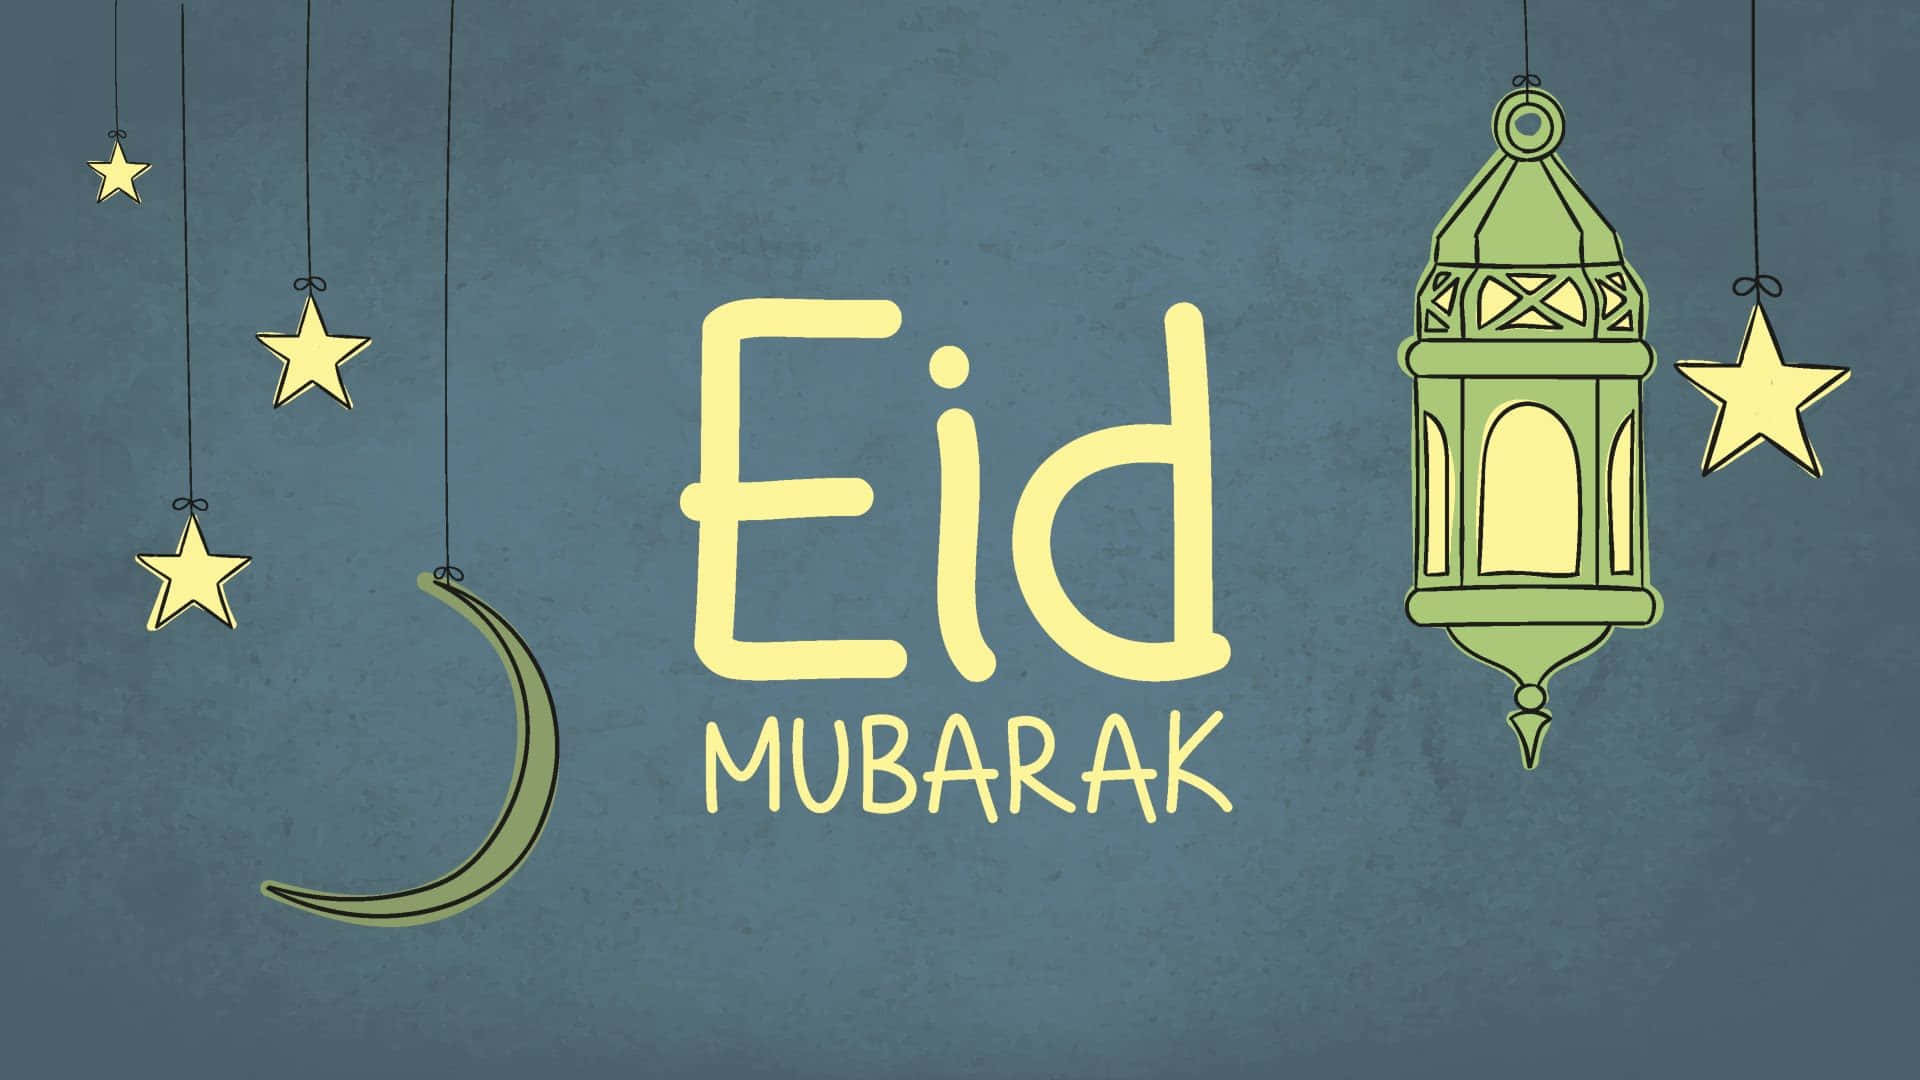 Eid Mubarak Greeting Card With Lanterns And Stars